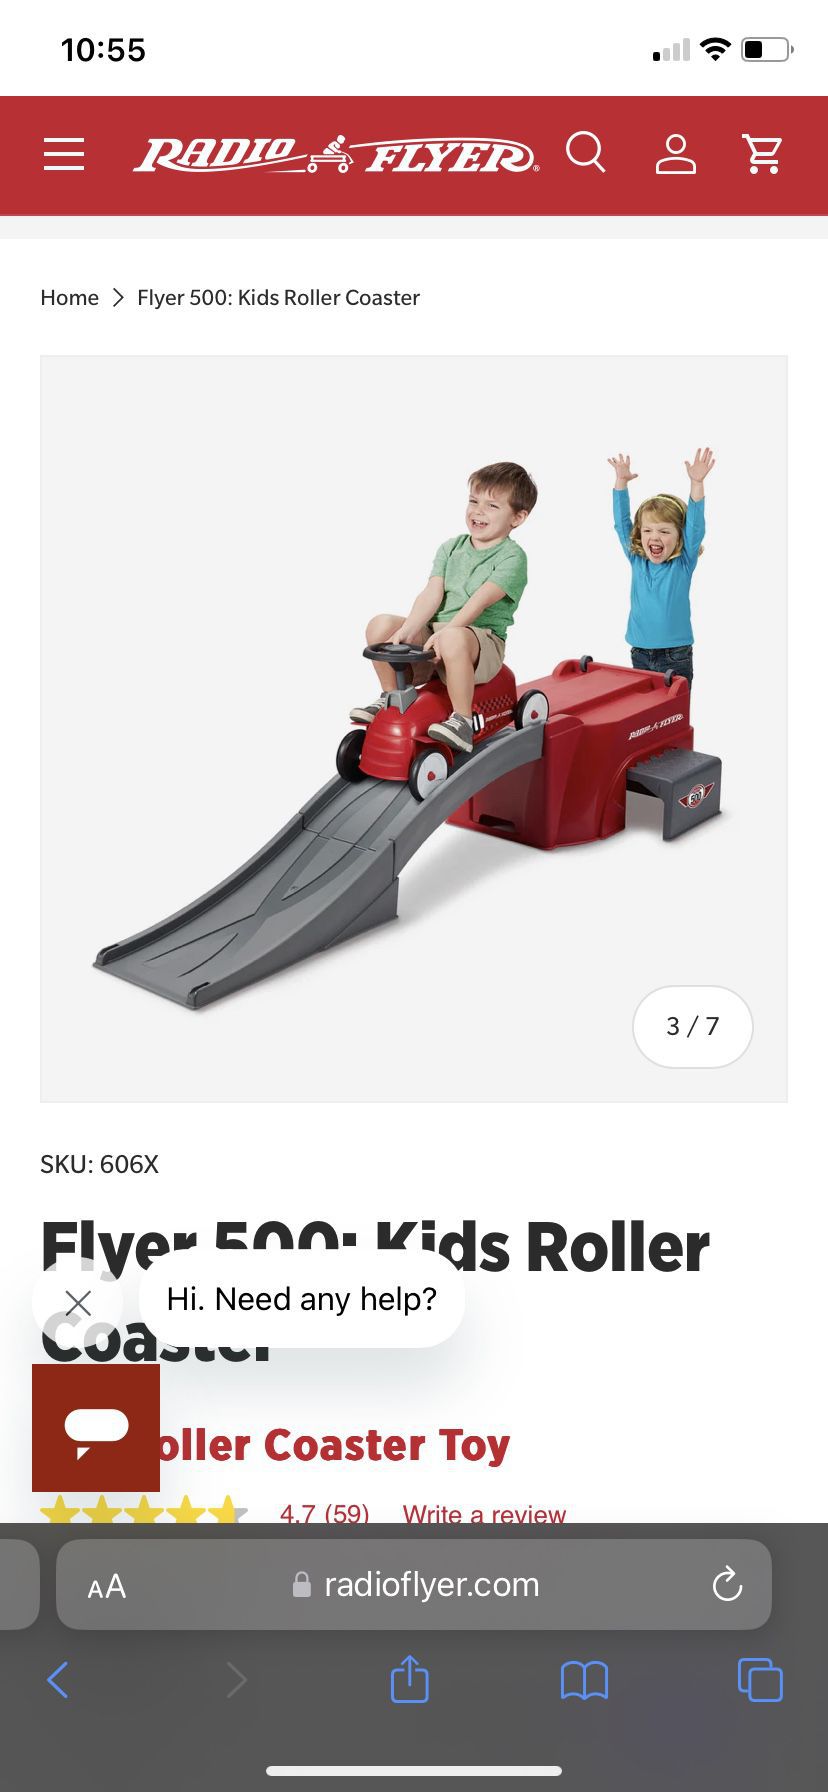  Radio Flyer Kid's Roller Coaster. FREE IN CASTLE ROCK!